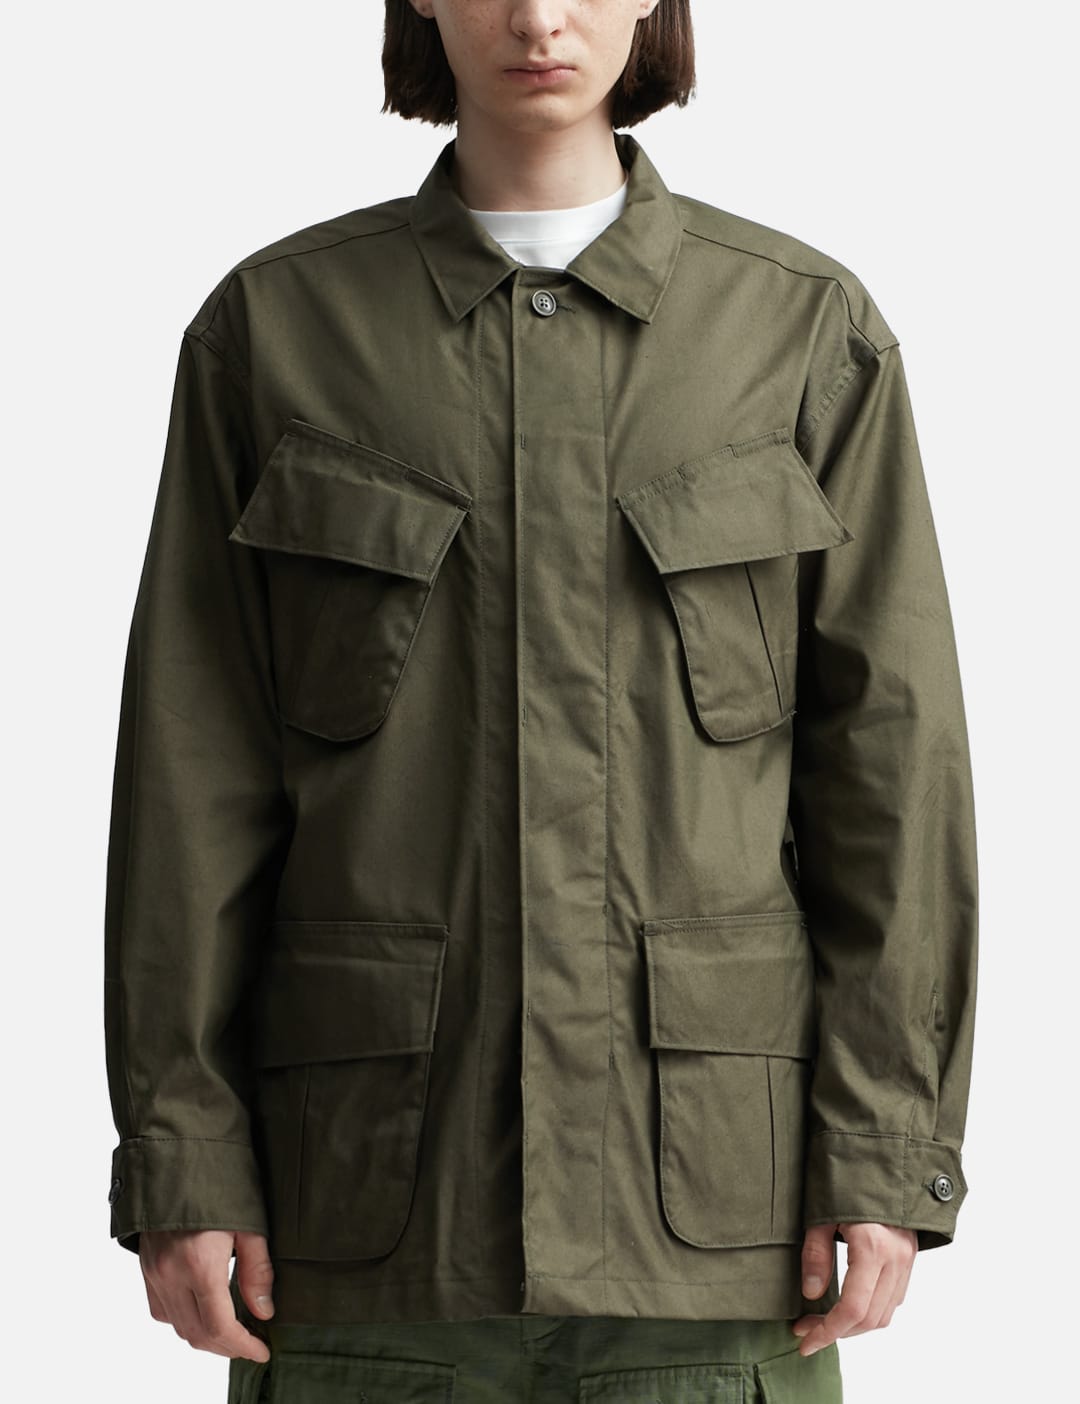 Engineered Garments - Jungle Fatigue Jacket | HBX - Globally 